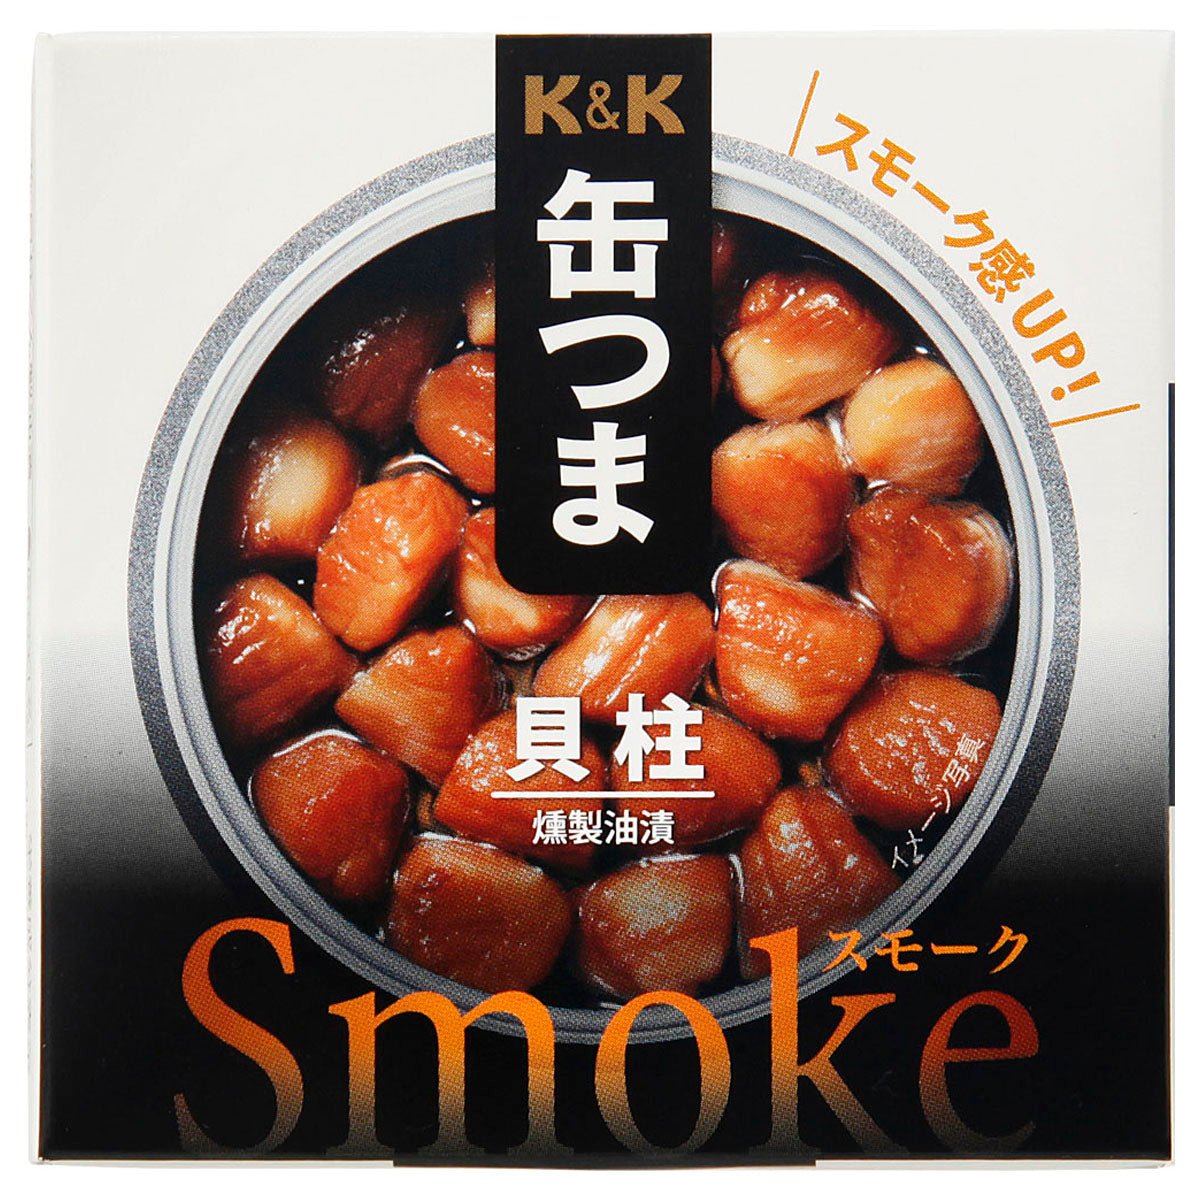 K & K는 Tsuma 연기 조개류를 할 수 있습니다